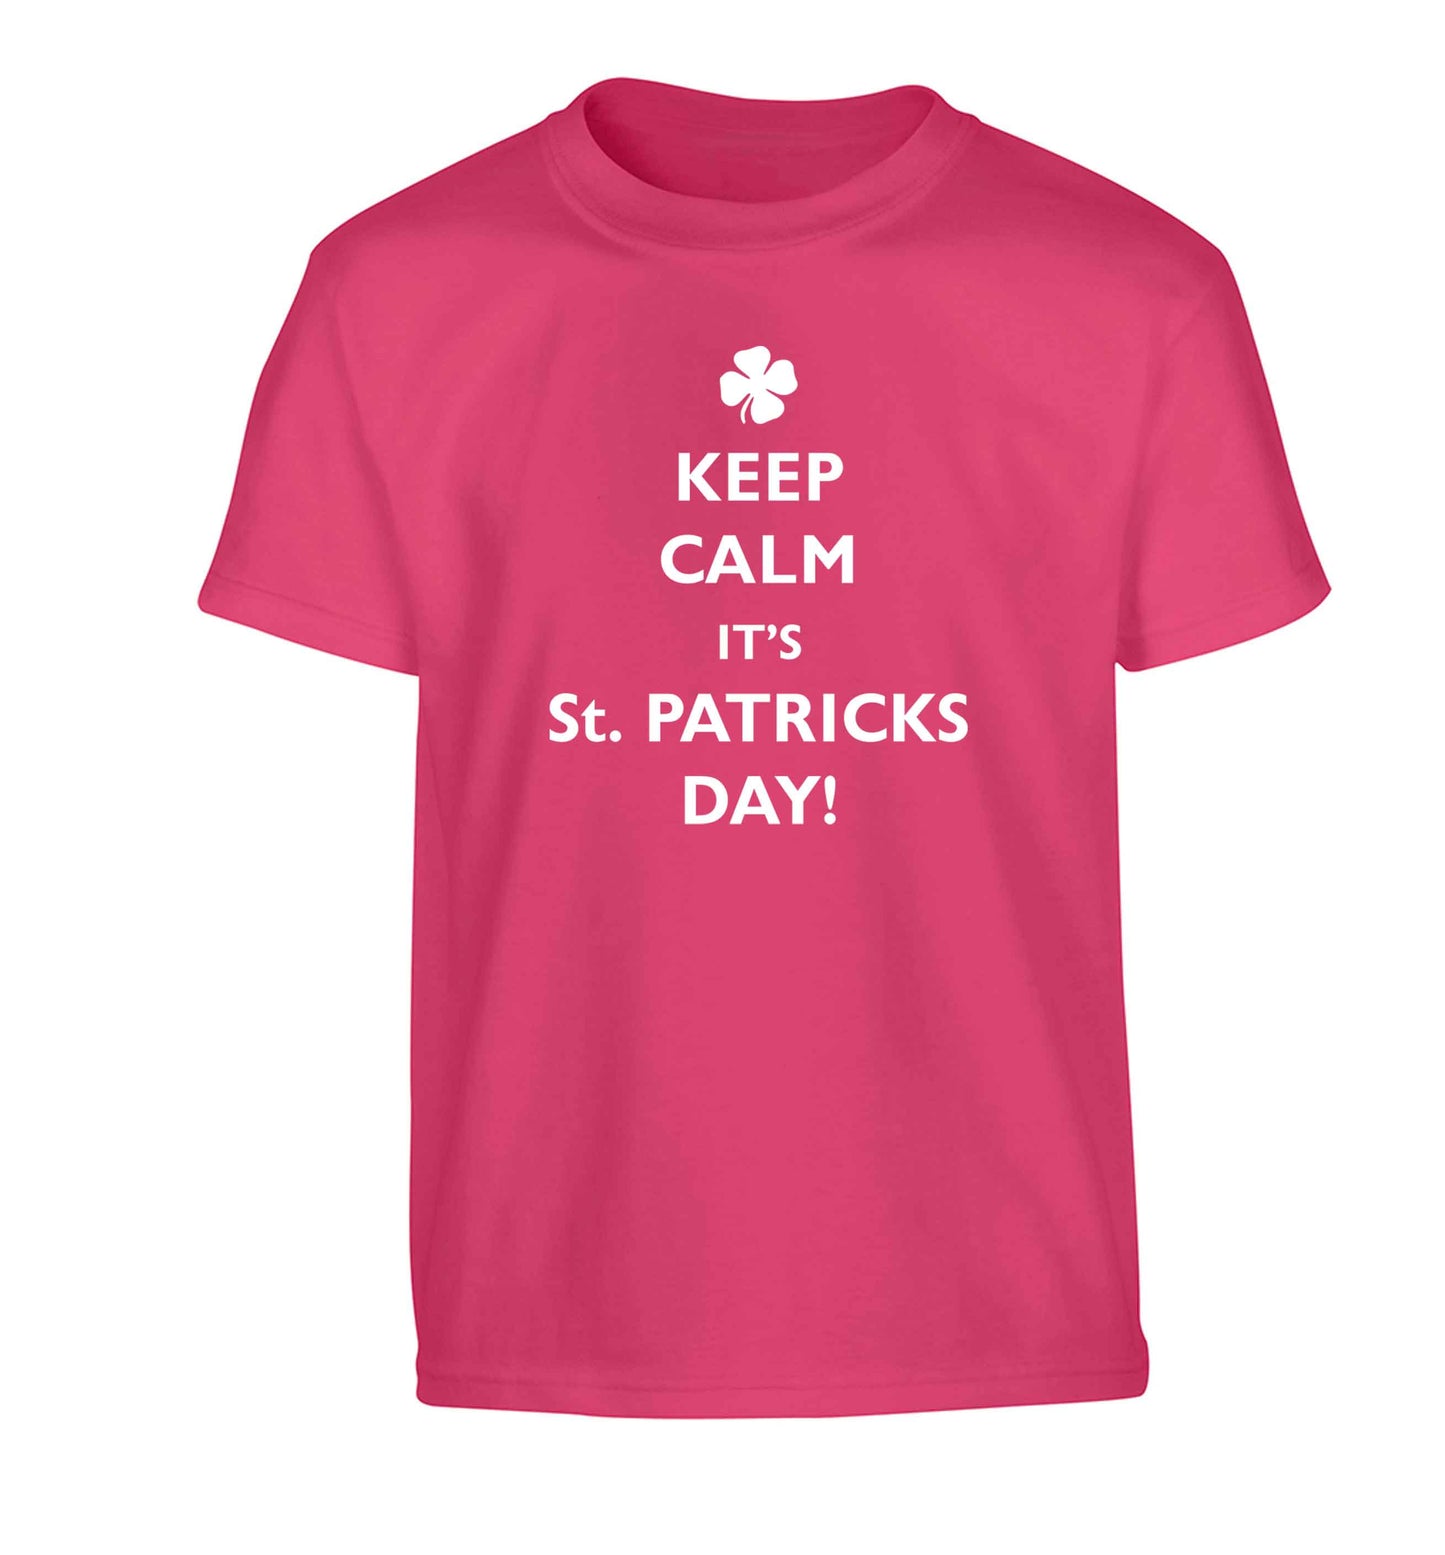 Keep calm it's St.Patricks day Children's pink Tshirt 12-13 Years